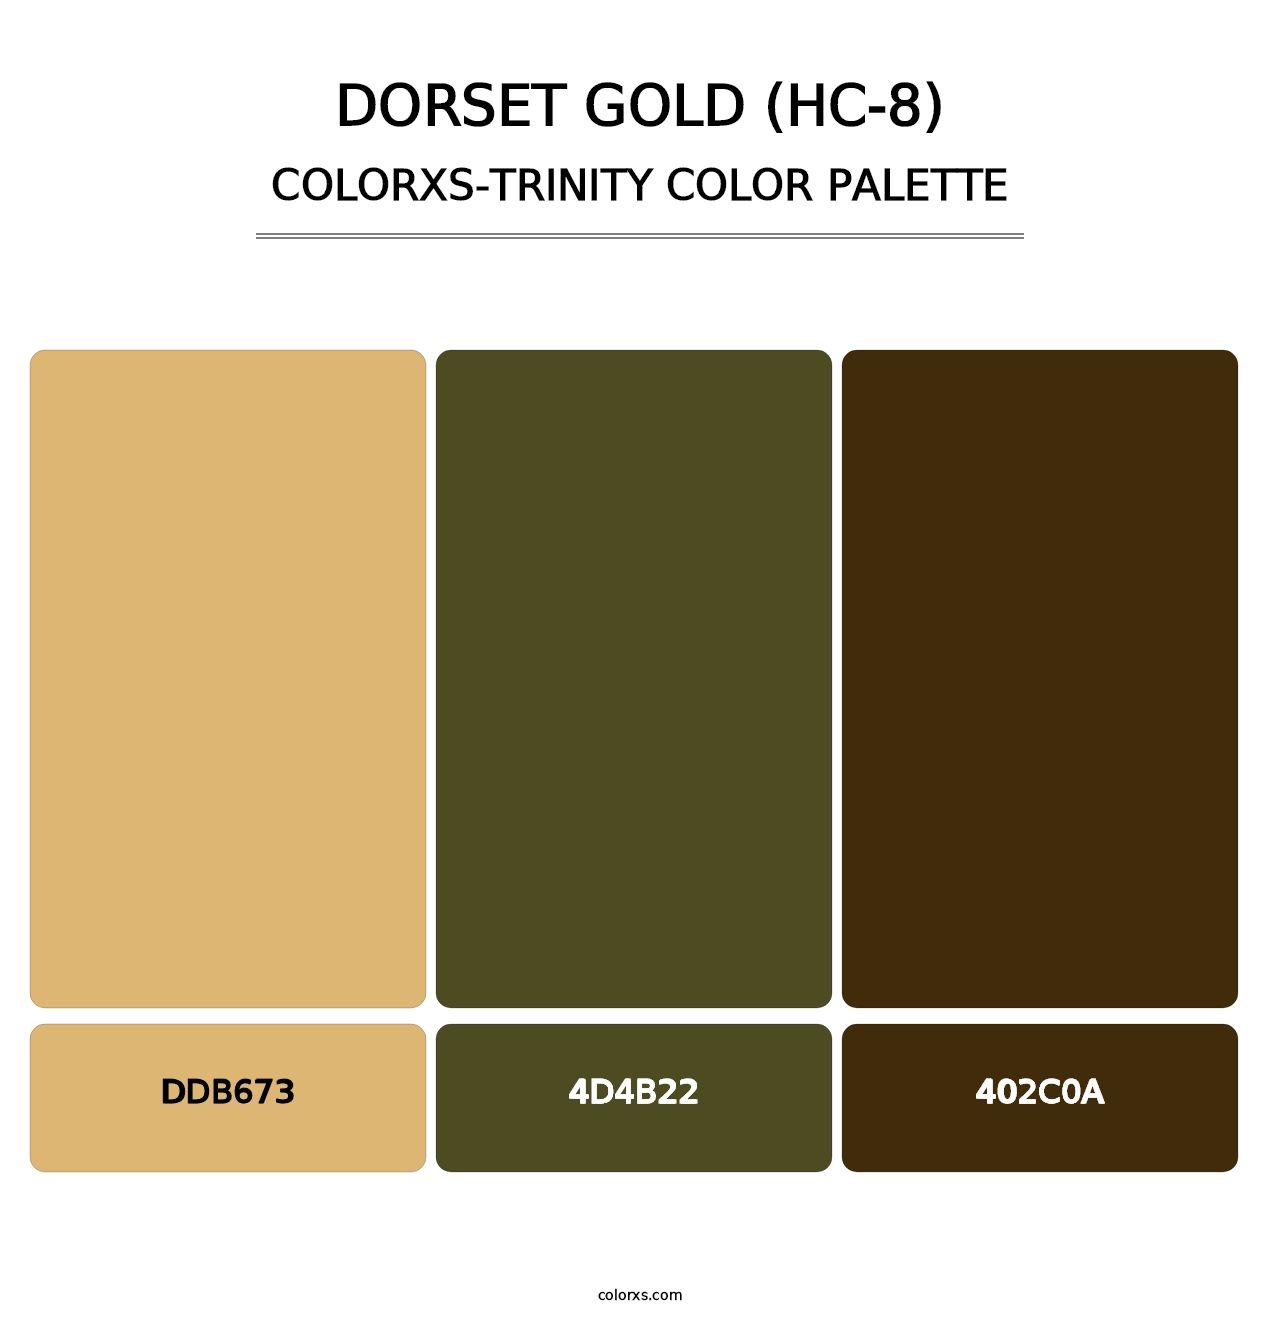 Dorset Gold (HC-8) - Colorxs Trinity Palette